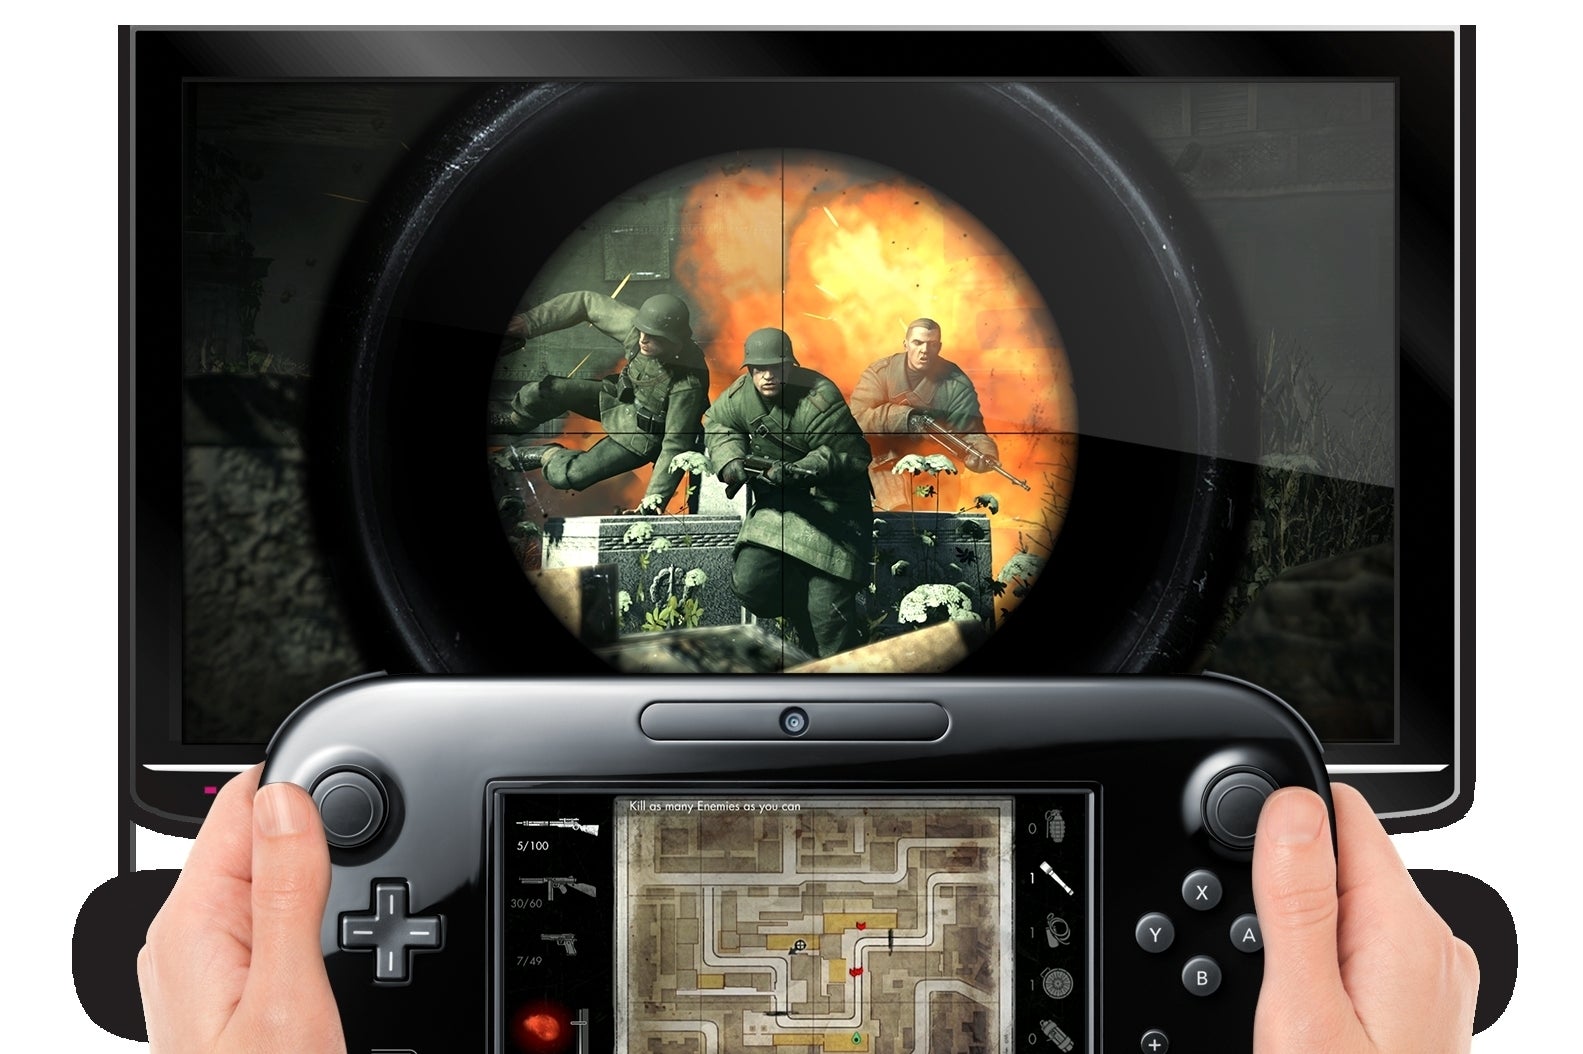 Immagine di Sniper Elite V2 per Wii U è disponibile nei negozi